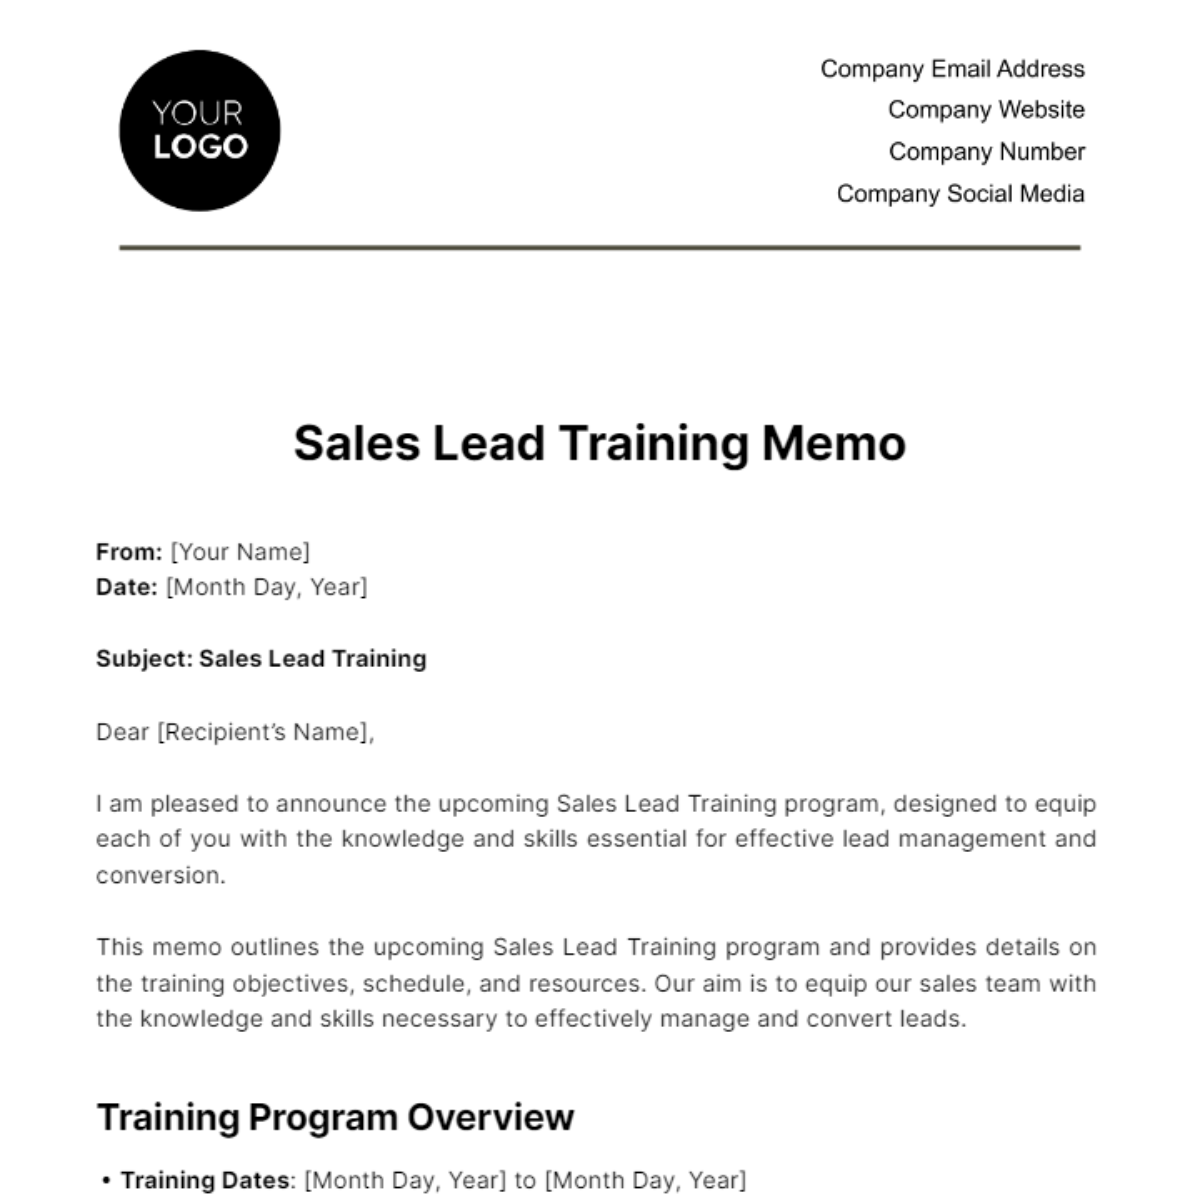 Sales Lead Training Memo Template